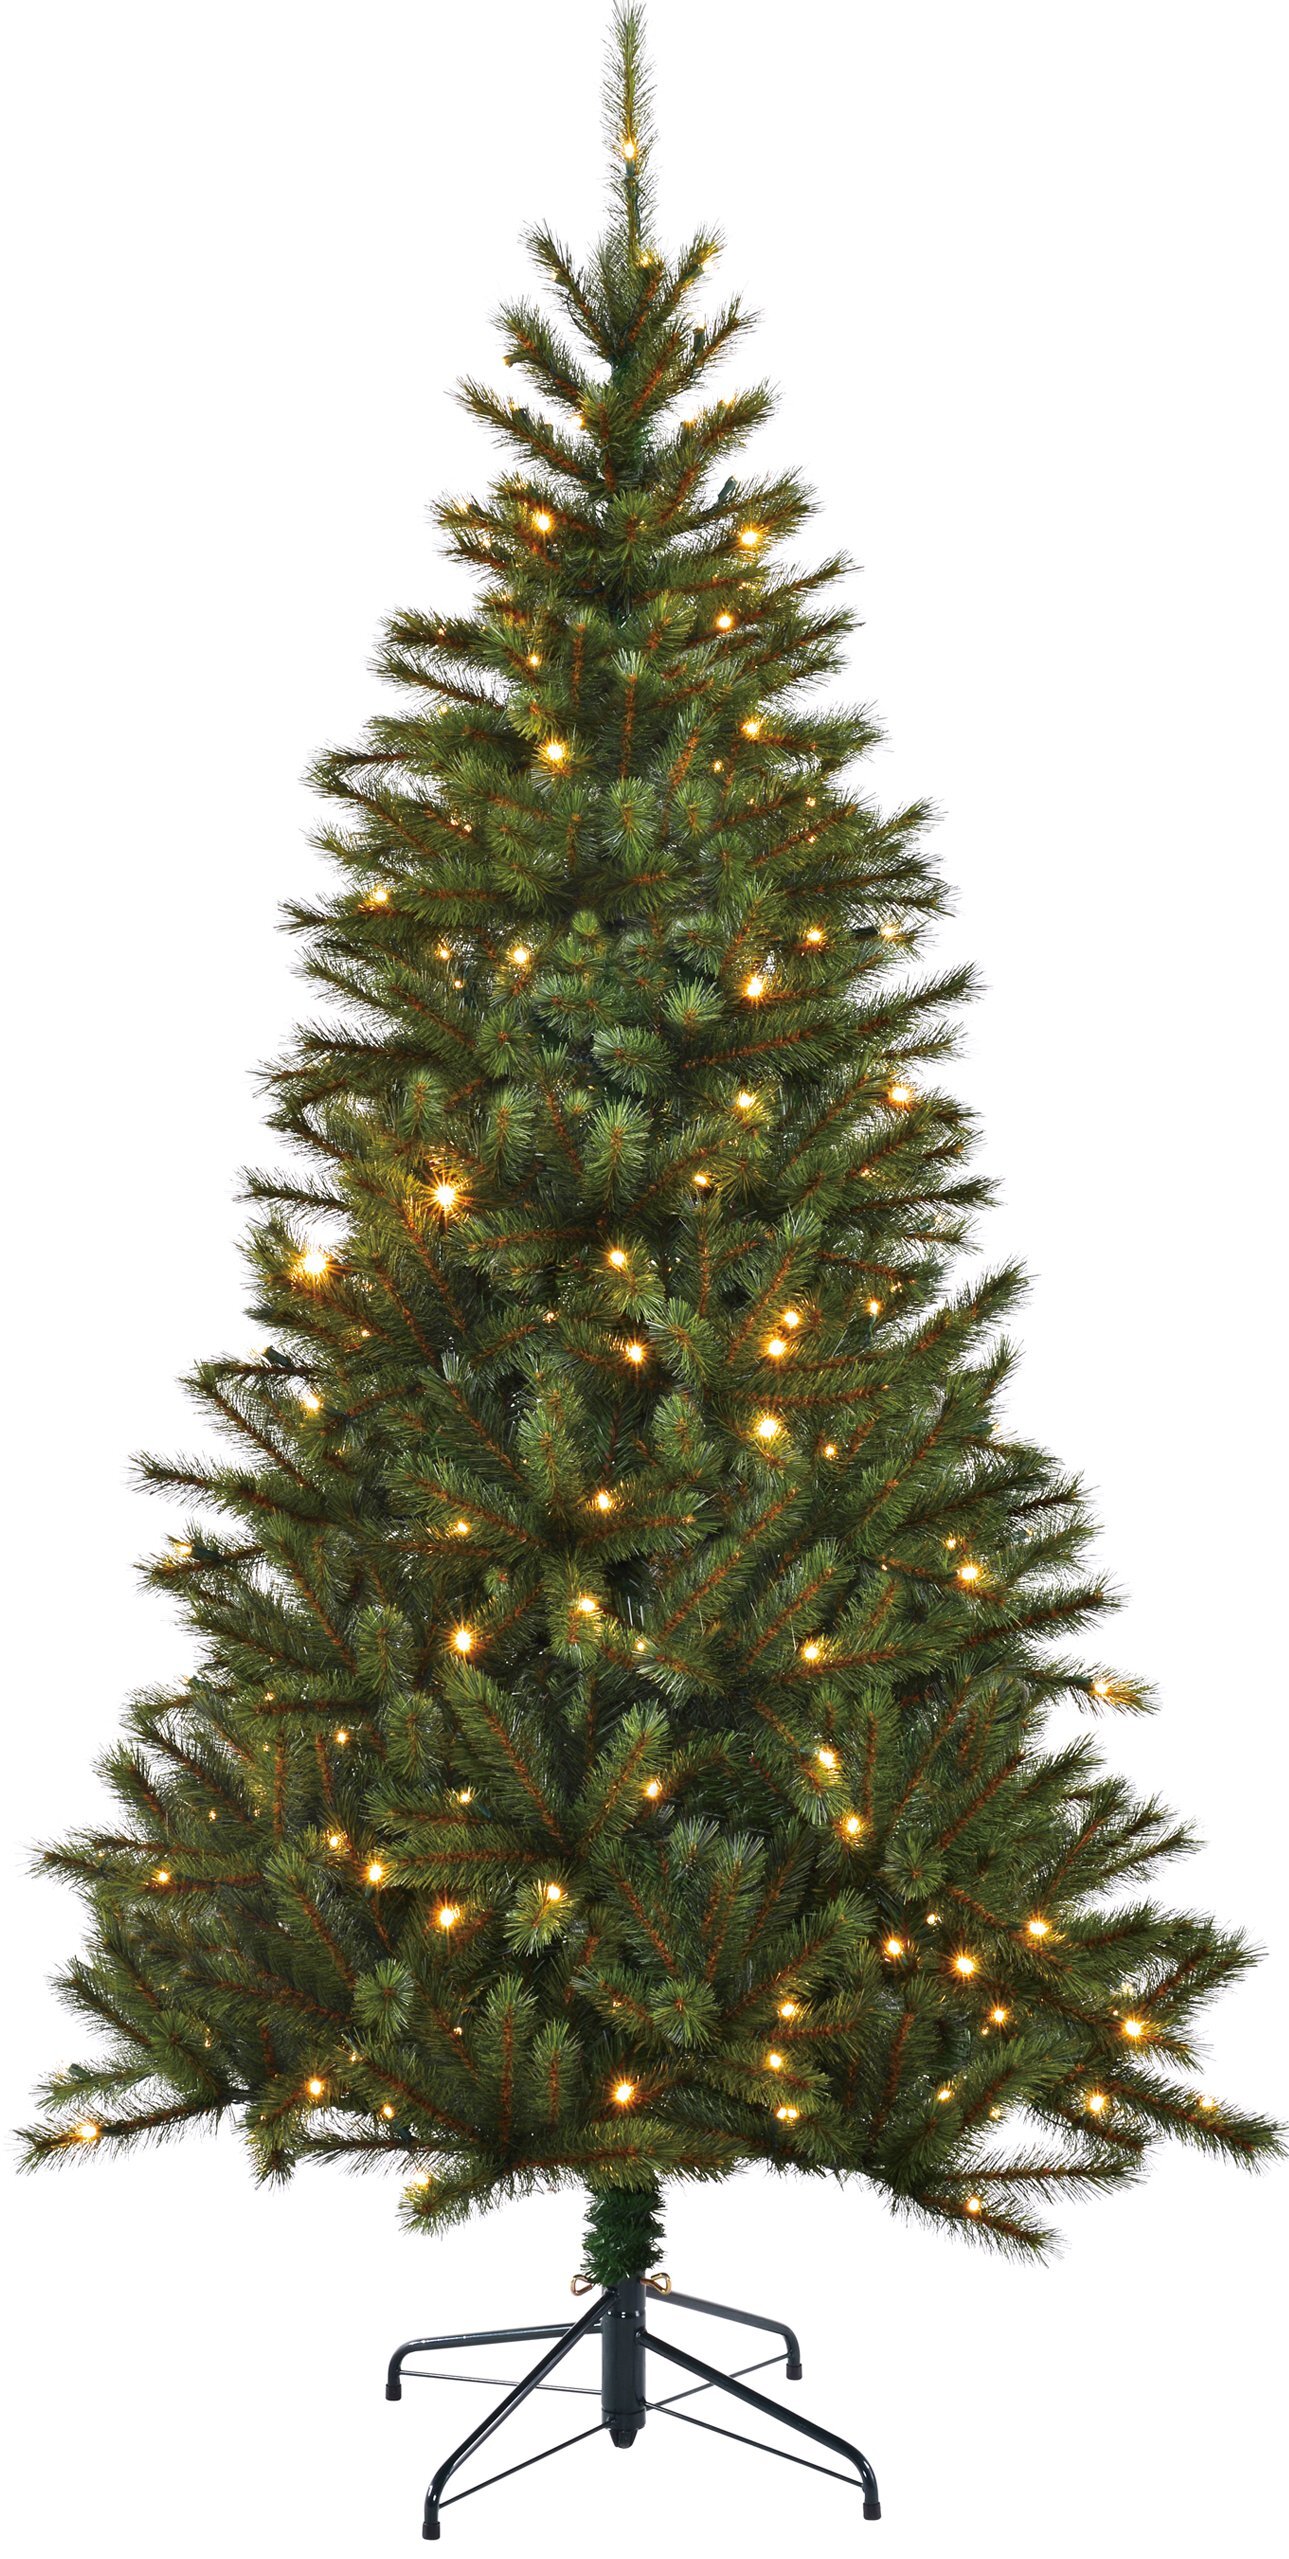 Blackbox smalle kerstboom led kingston pine maat in cm: 215 x 117 groen 240 lampjes met warmwit